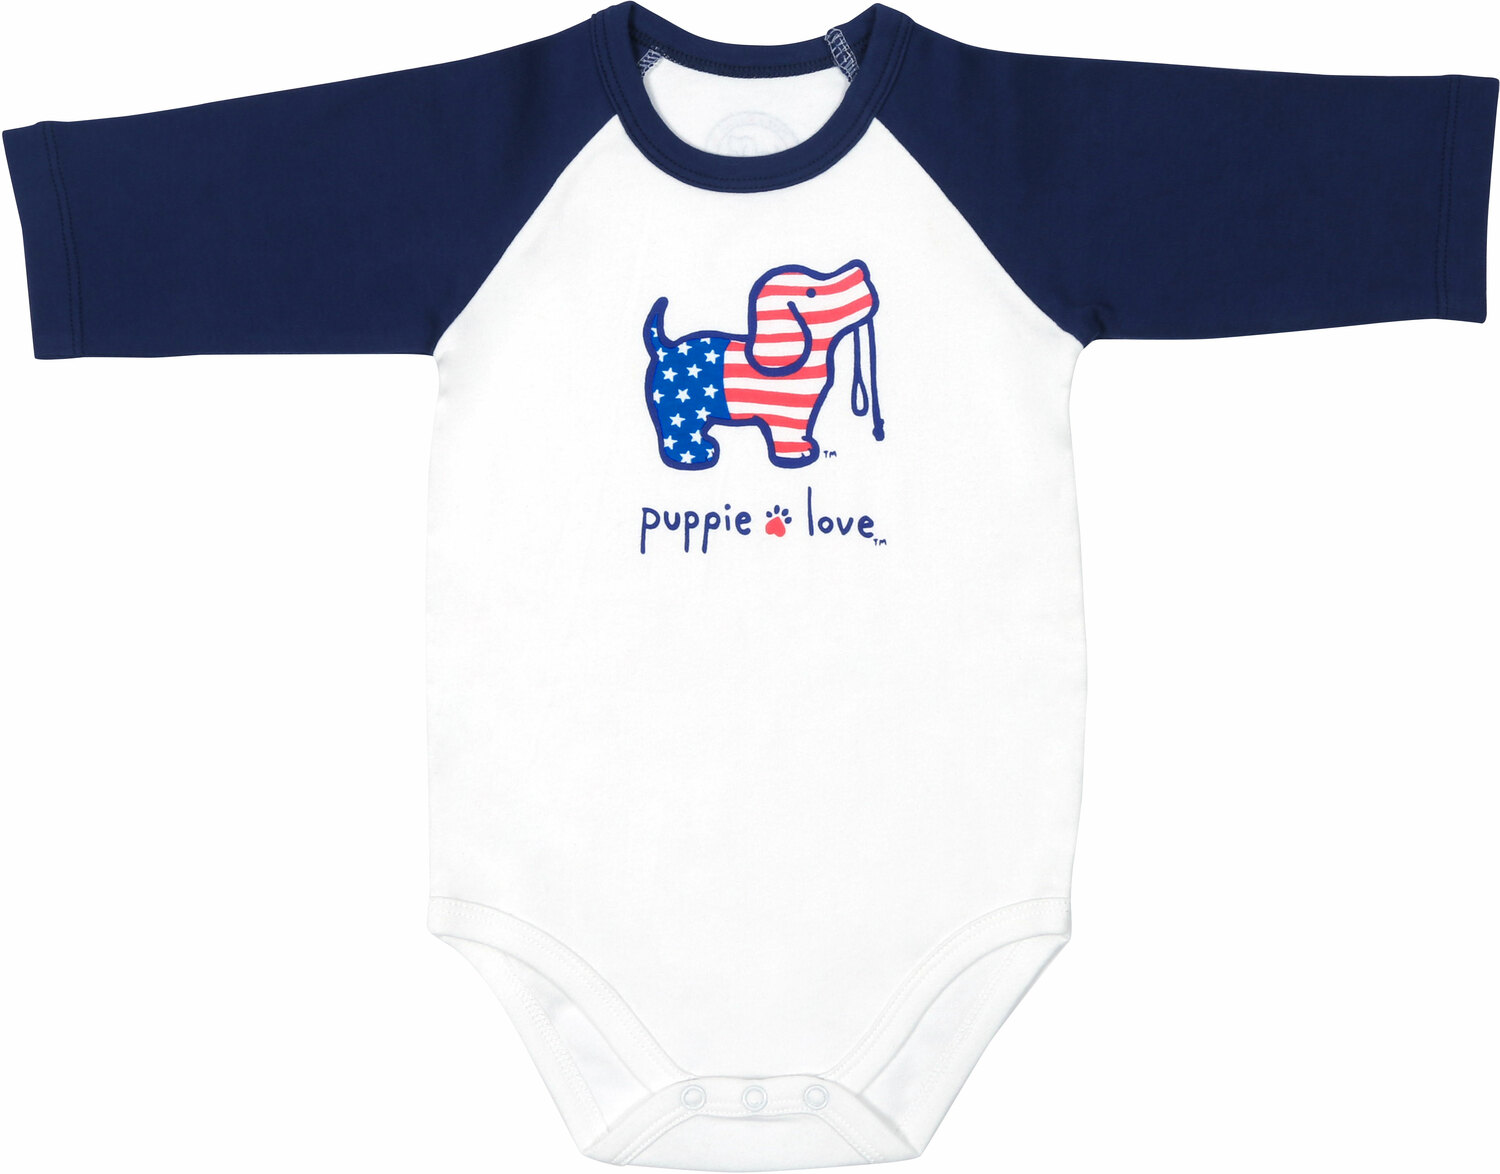 USA by Puppie Love - USA - 6-12 Months
3/4 Length Navy Sleeve Onesie